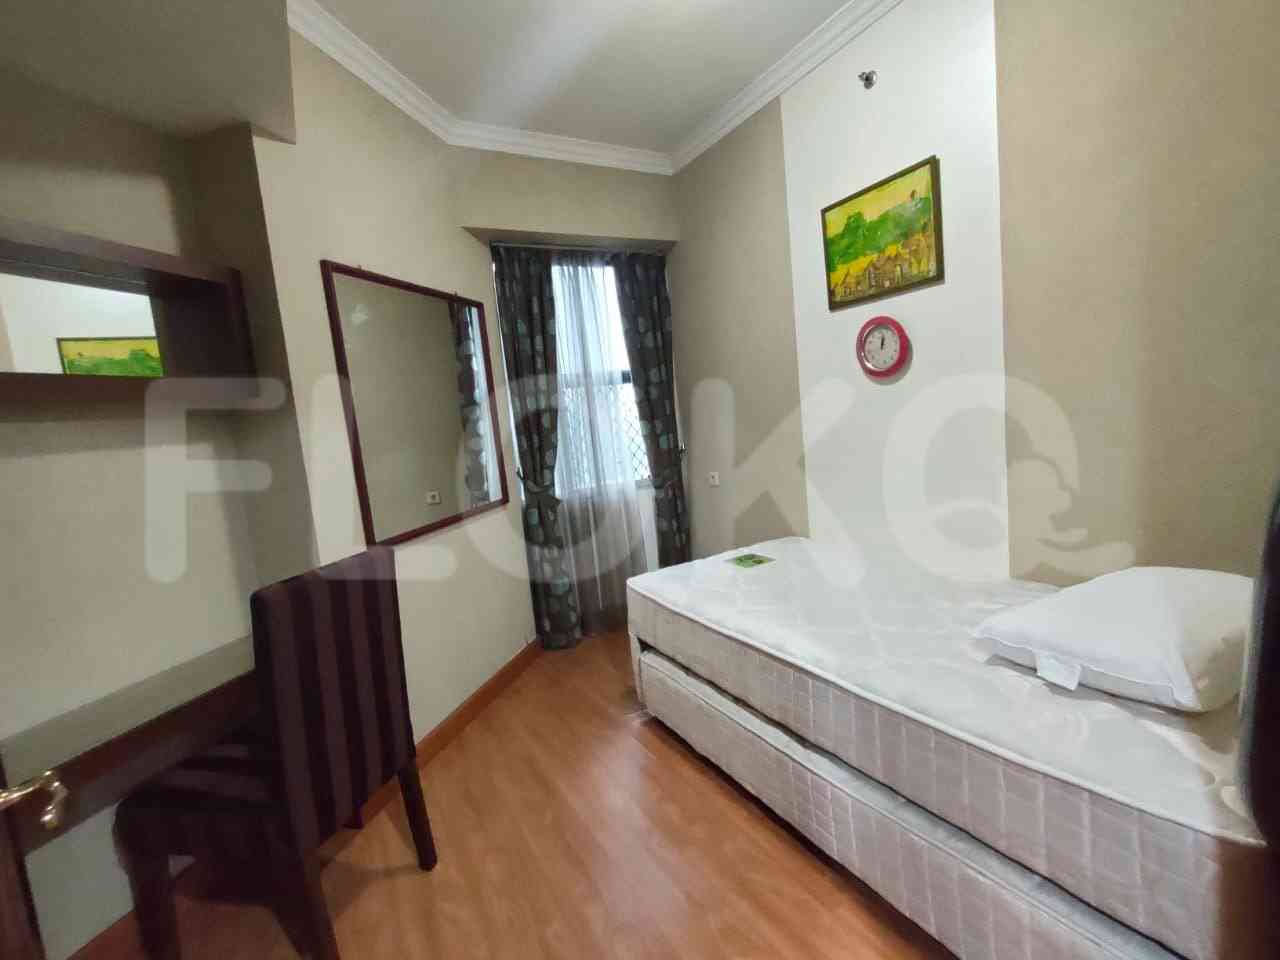 2 Bedroom on 21st Floor for Rent in Aryaduta Suites Semanggi - fsu916 1